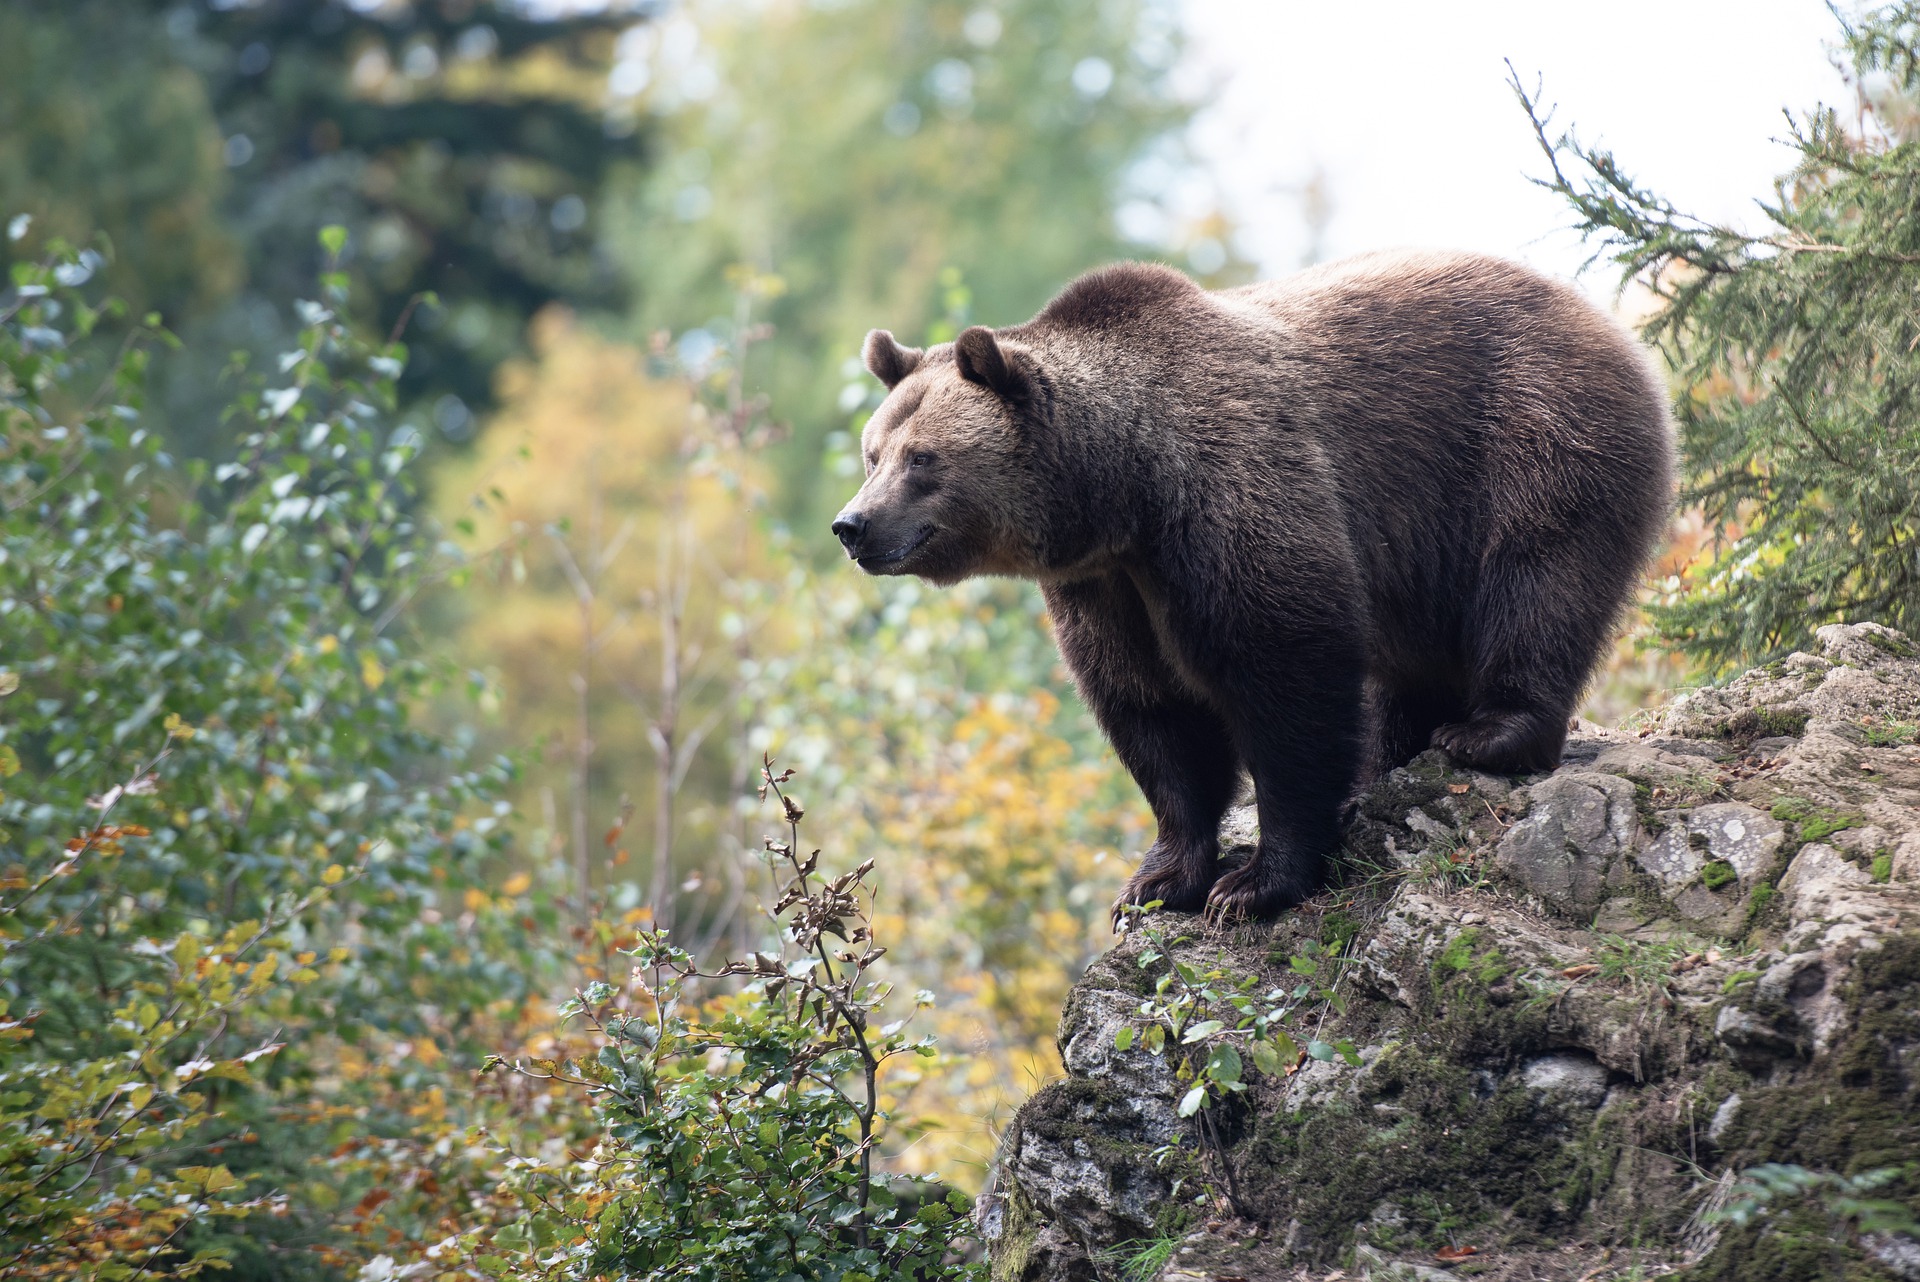 Another Bear Seen Near the Hungarian Capital